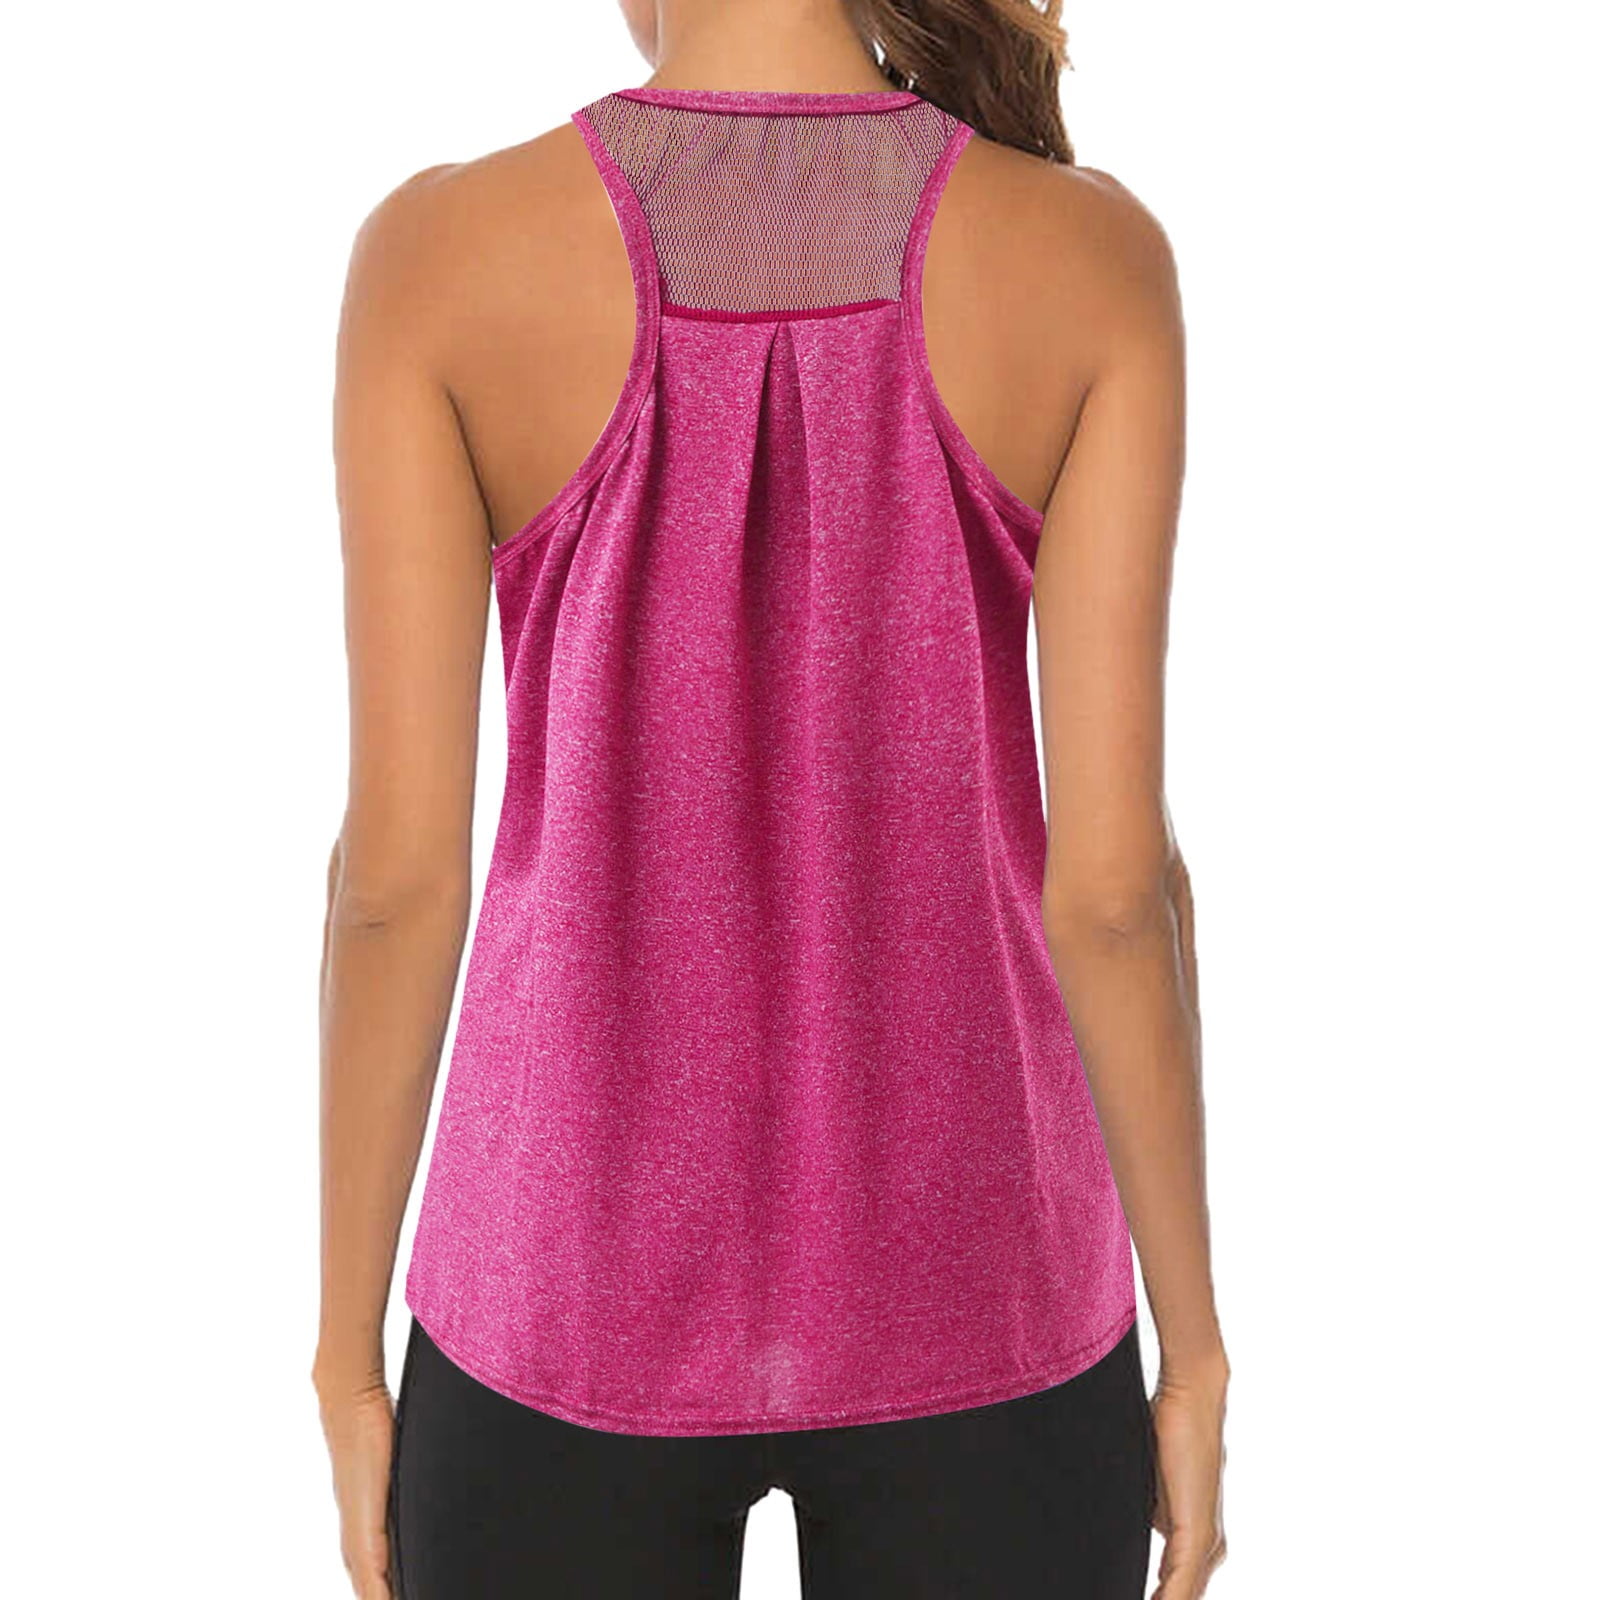 MRULIC tank top for women Women Workout Tops Mesh Racerback Yoga Tank  Shirts Gym Running Tops Womens tank tops Hot Pink + S 